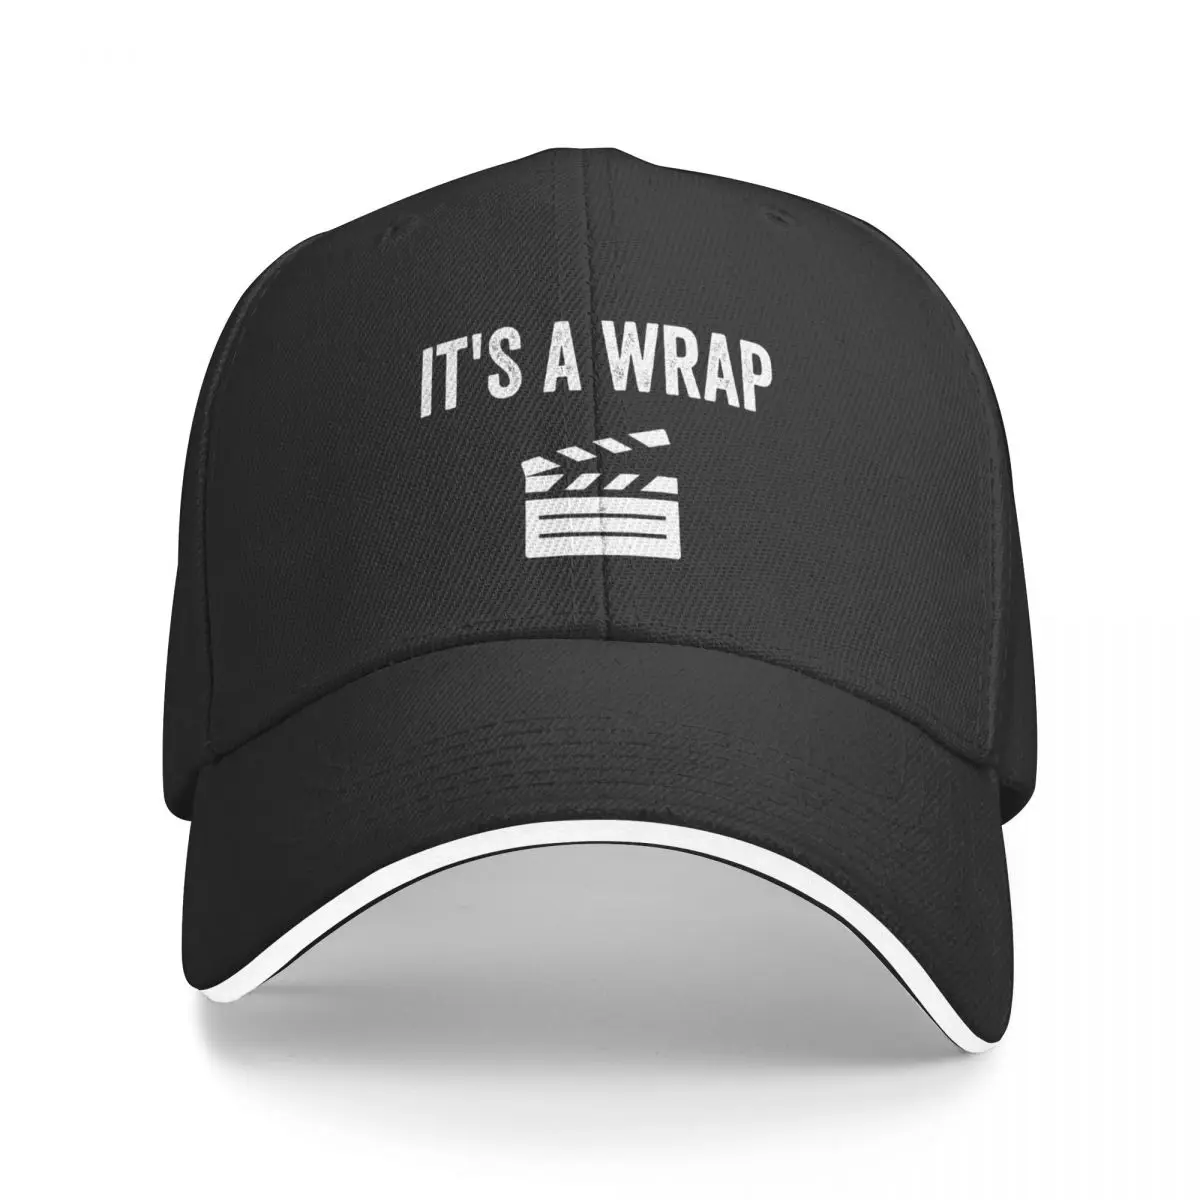 It's A Wrap For Cinematographer Cap Baseball Cap sun hat luxury man hat hat  winter for women Men's - AliExpress